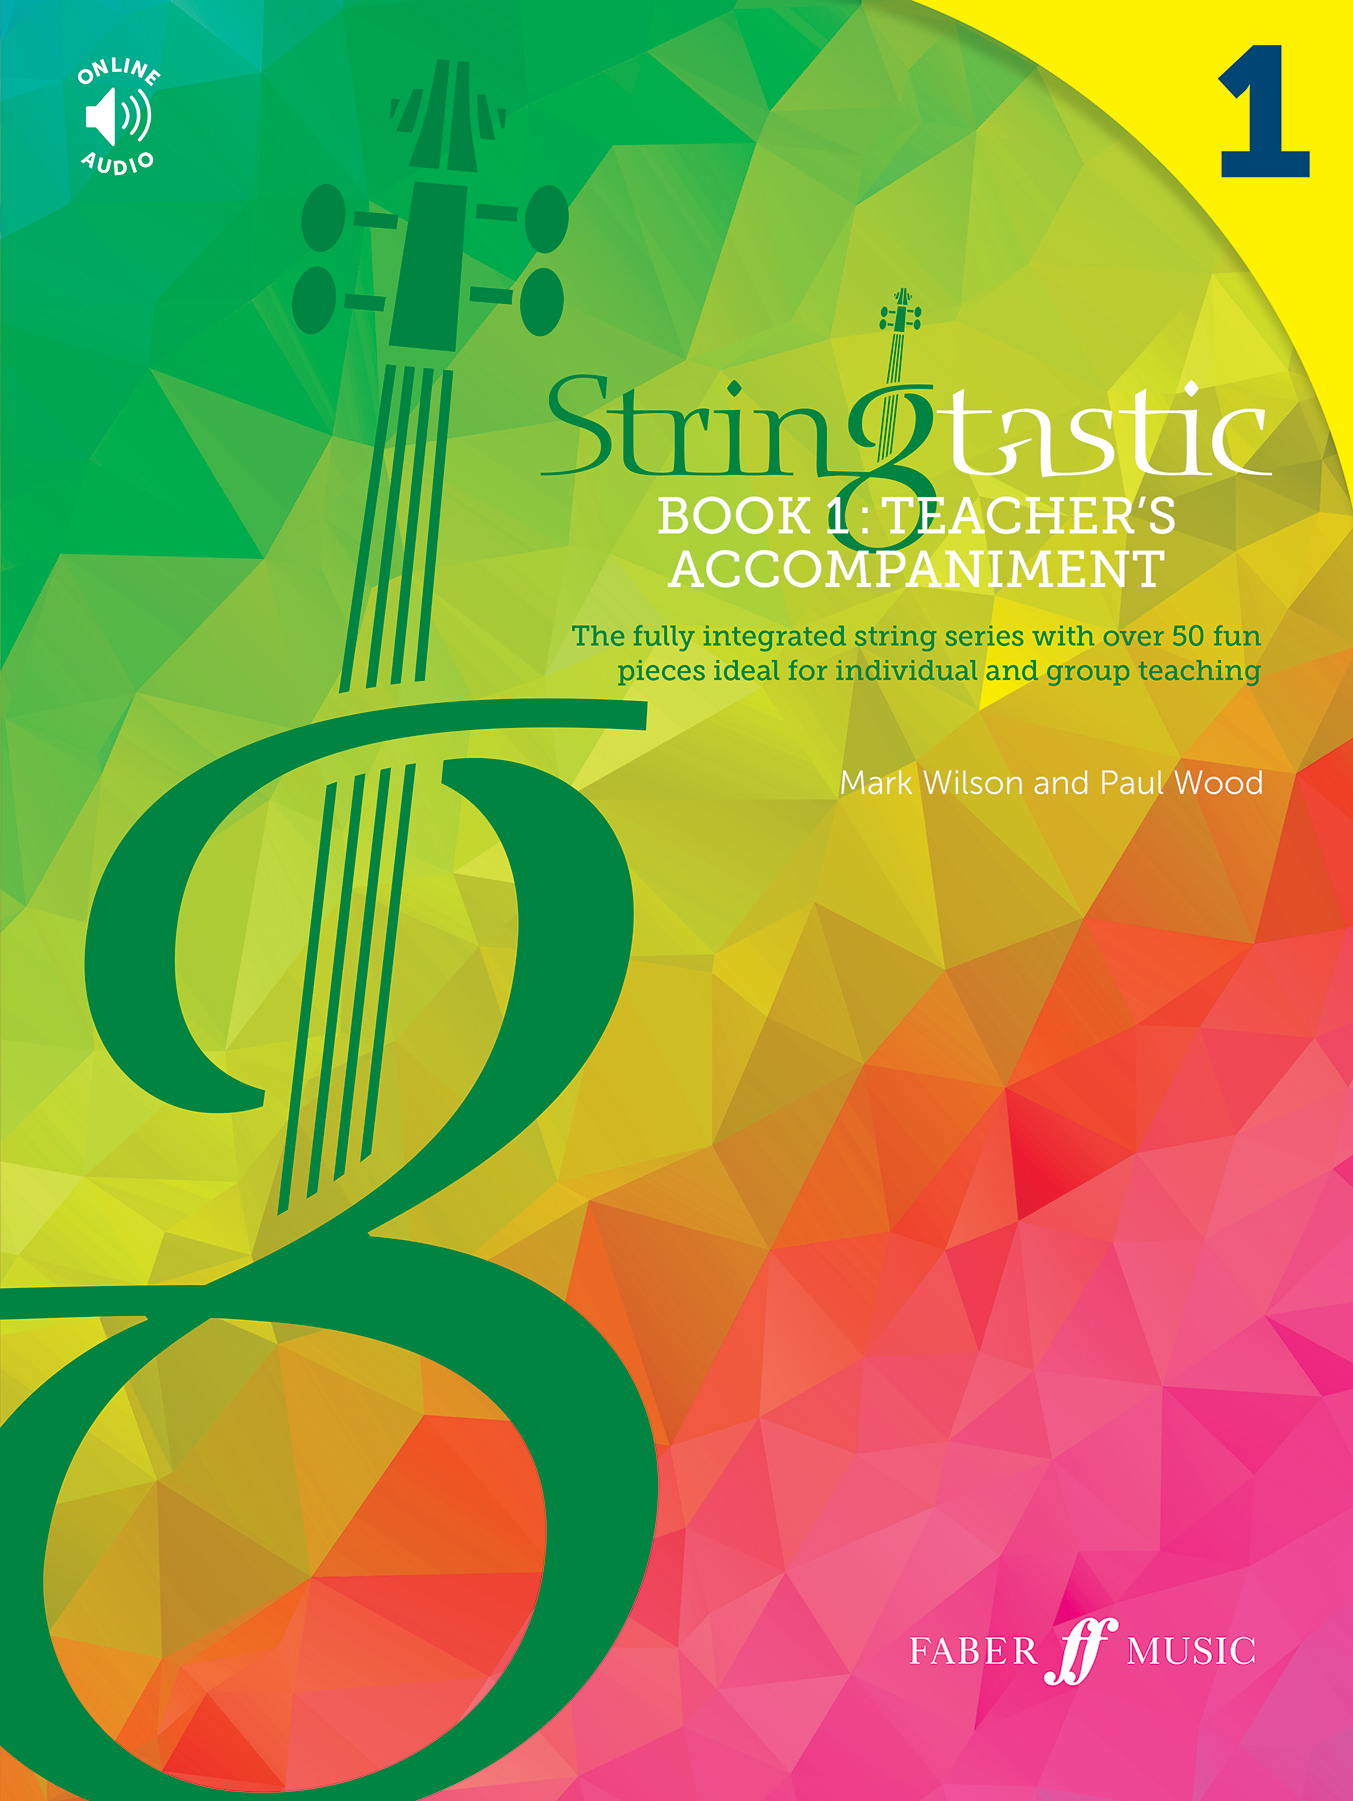 Stringtastic Book 1 Teachers Accompaniment Sheet Music Songbook